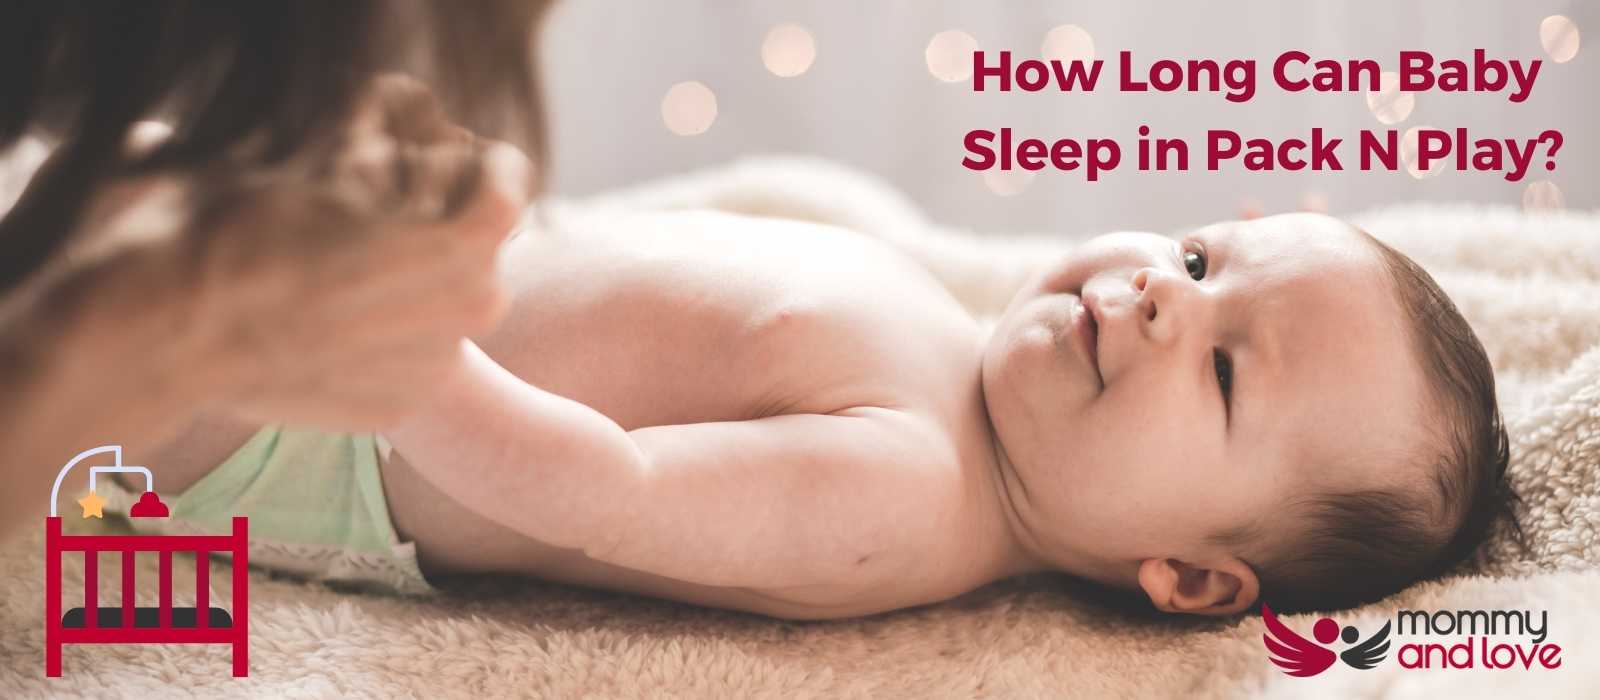 How Long Can Baby Sleep in Pack N Play